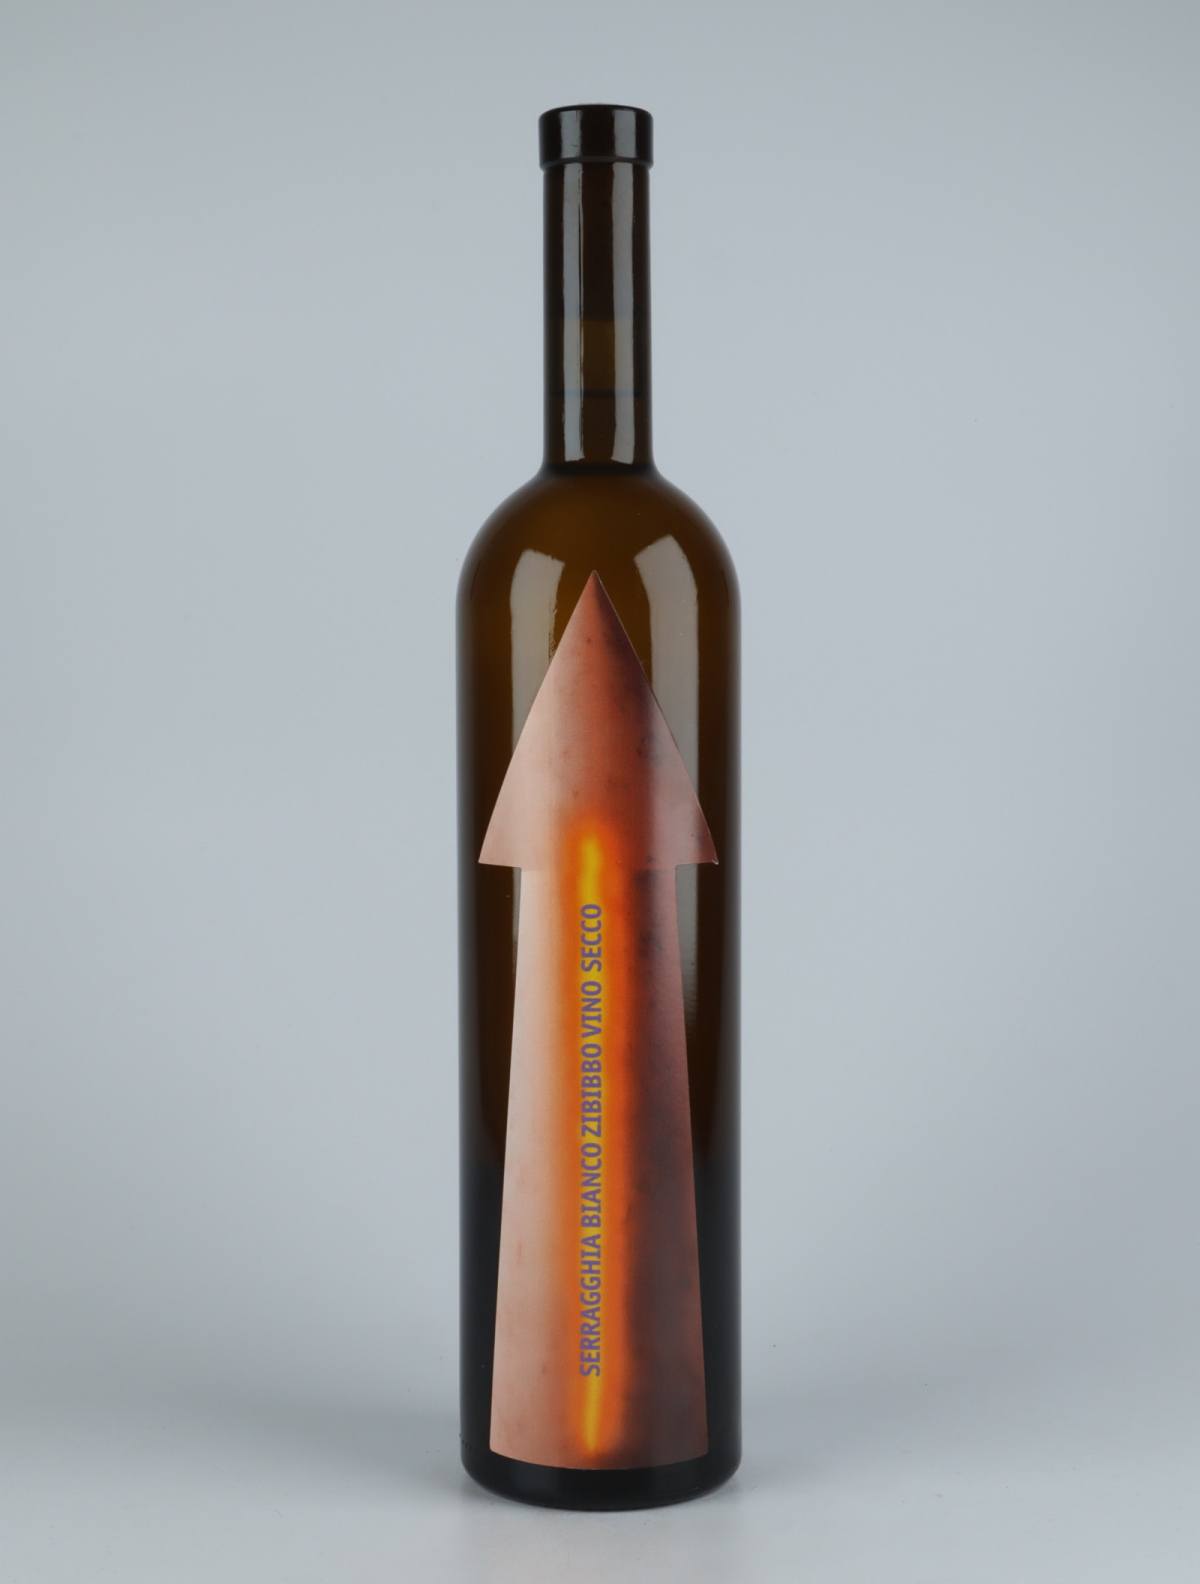 A bottle 2020 Serragghia Bianco Orange wine from Gabrio Bini, Sicily in Italy